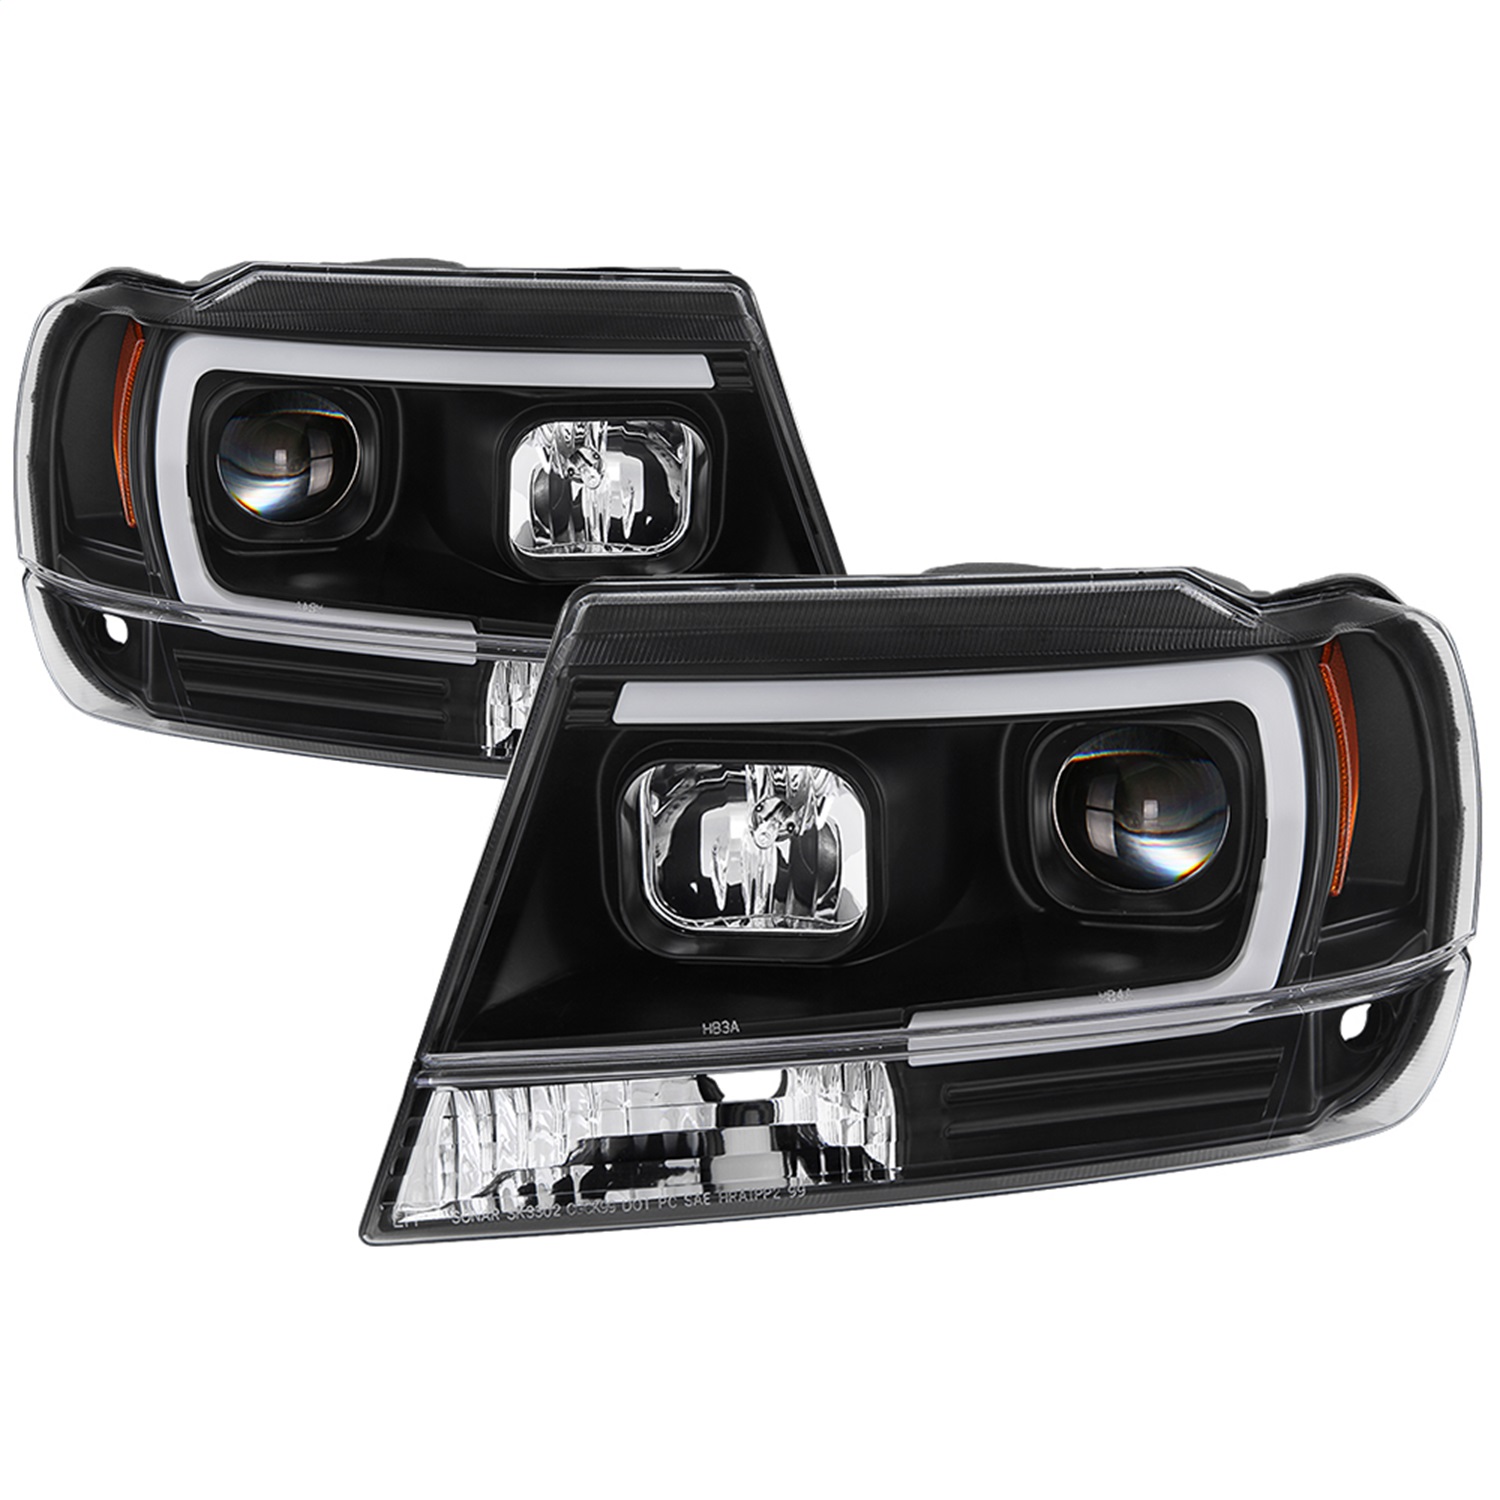 Spyder Auto 5085221 Projector Headlights Fits 99-04 Grand Cherokee (WJ)